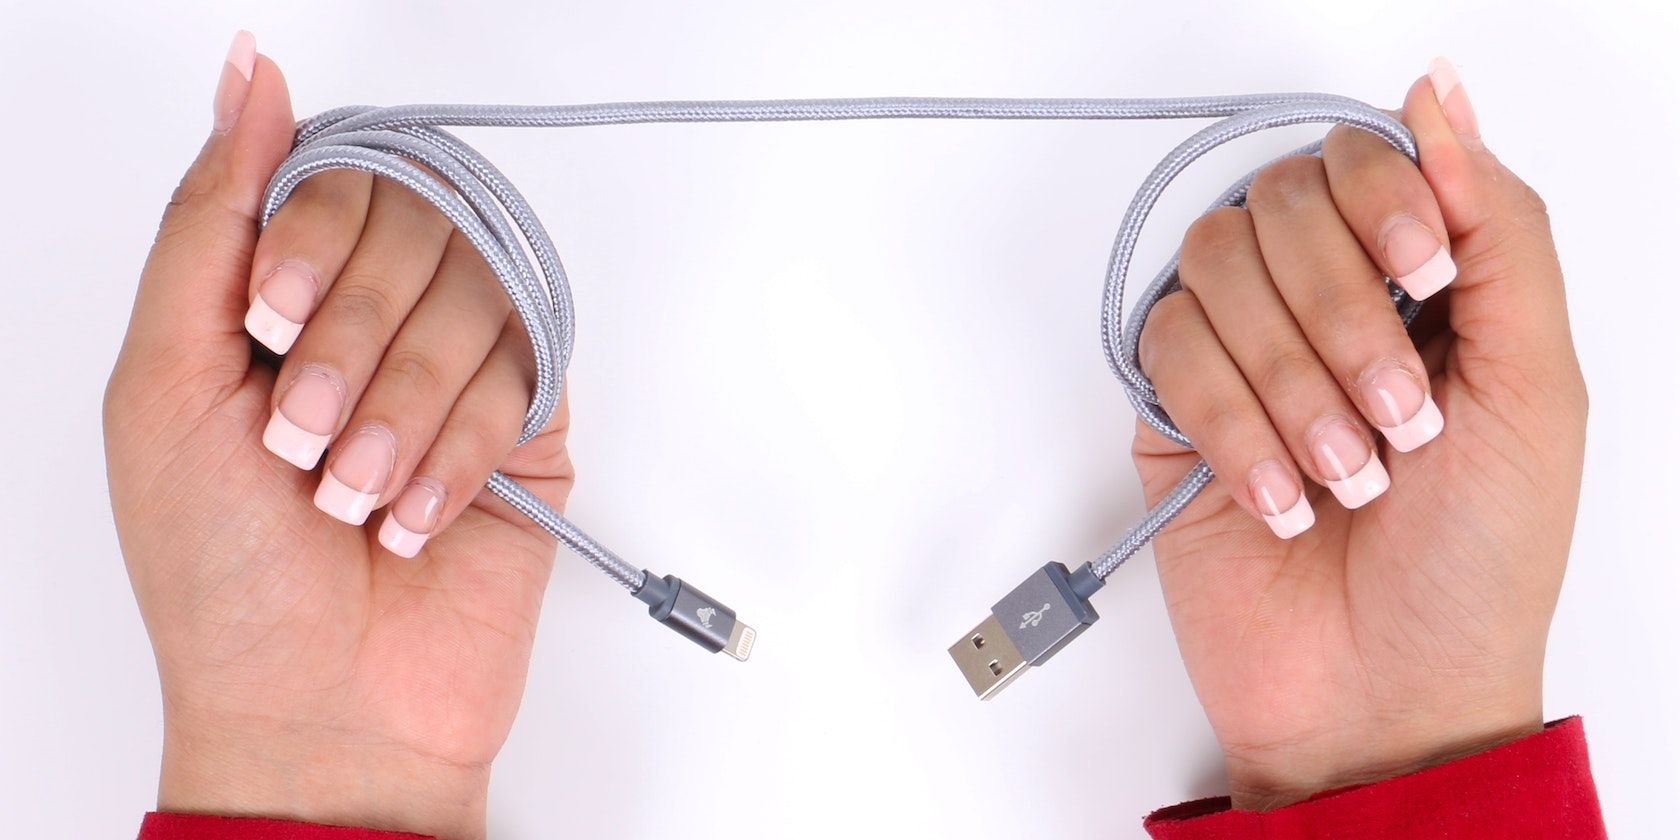 Hands grabbing gray iPhone charging cord